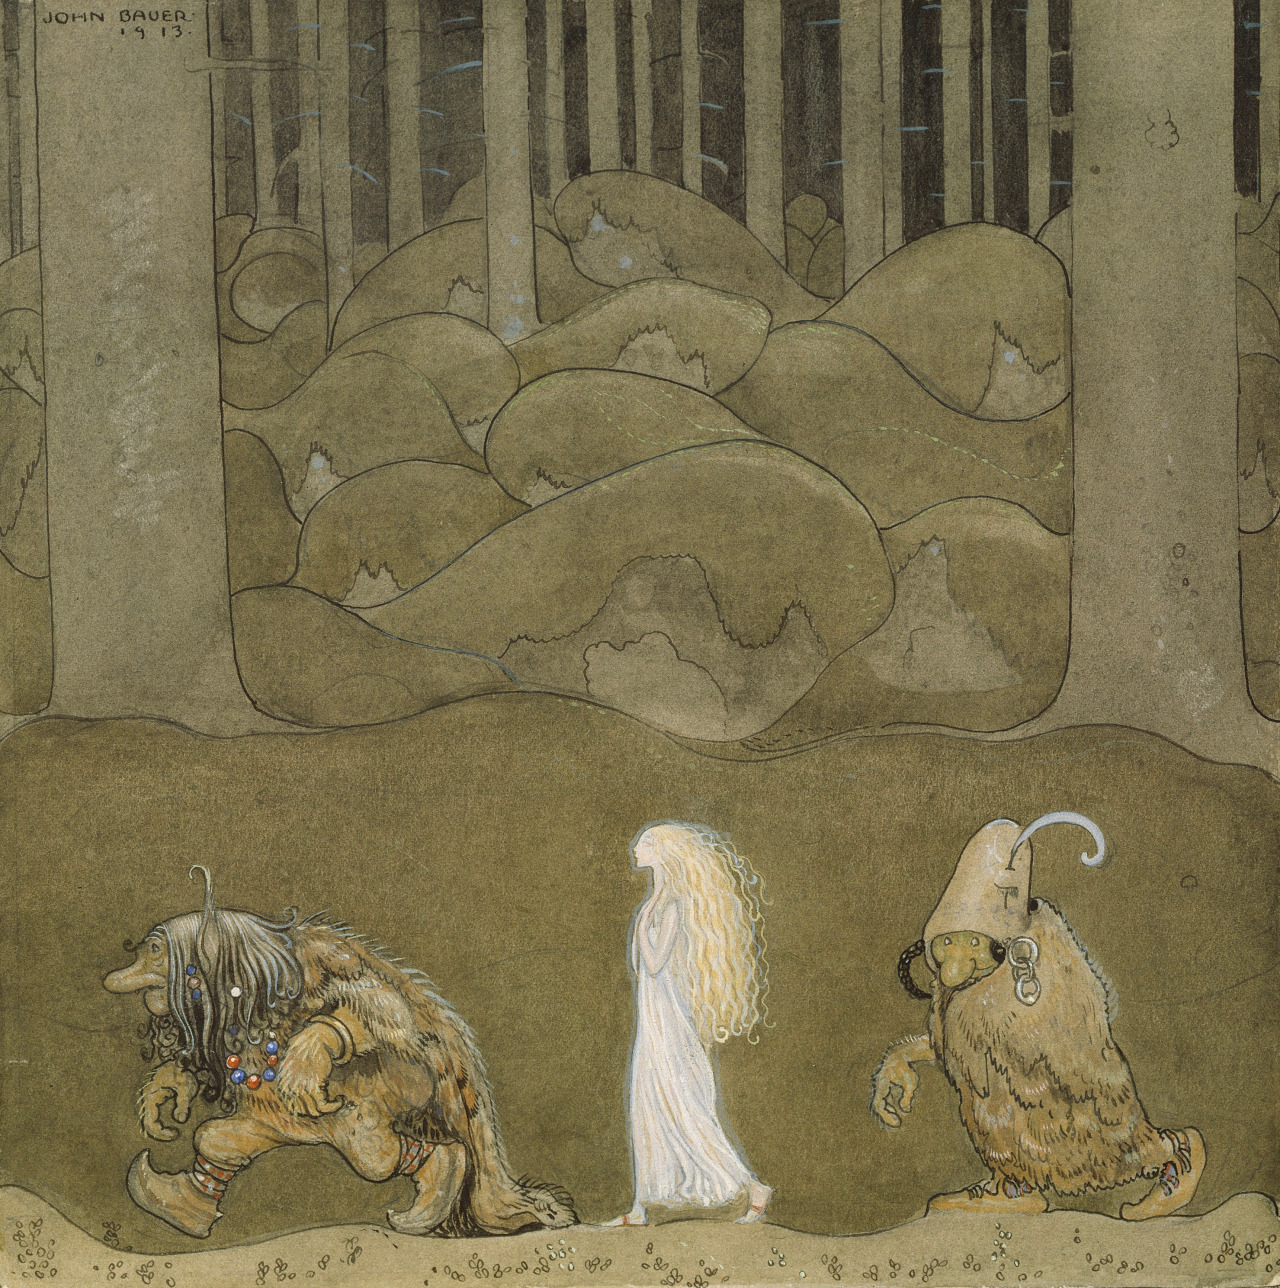 John Bauer. The Princess and the Trolls. Bortbytingarna (The Changelings), 1913.